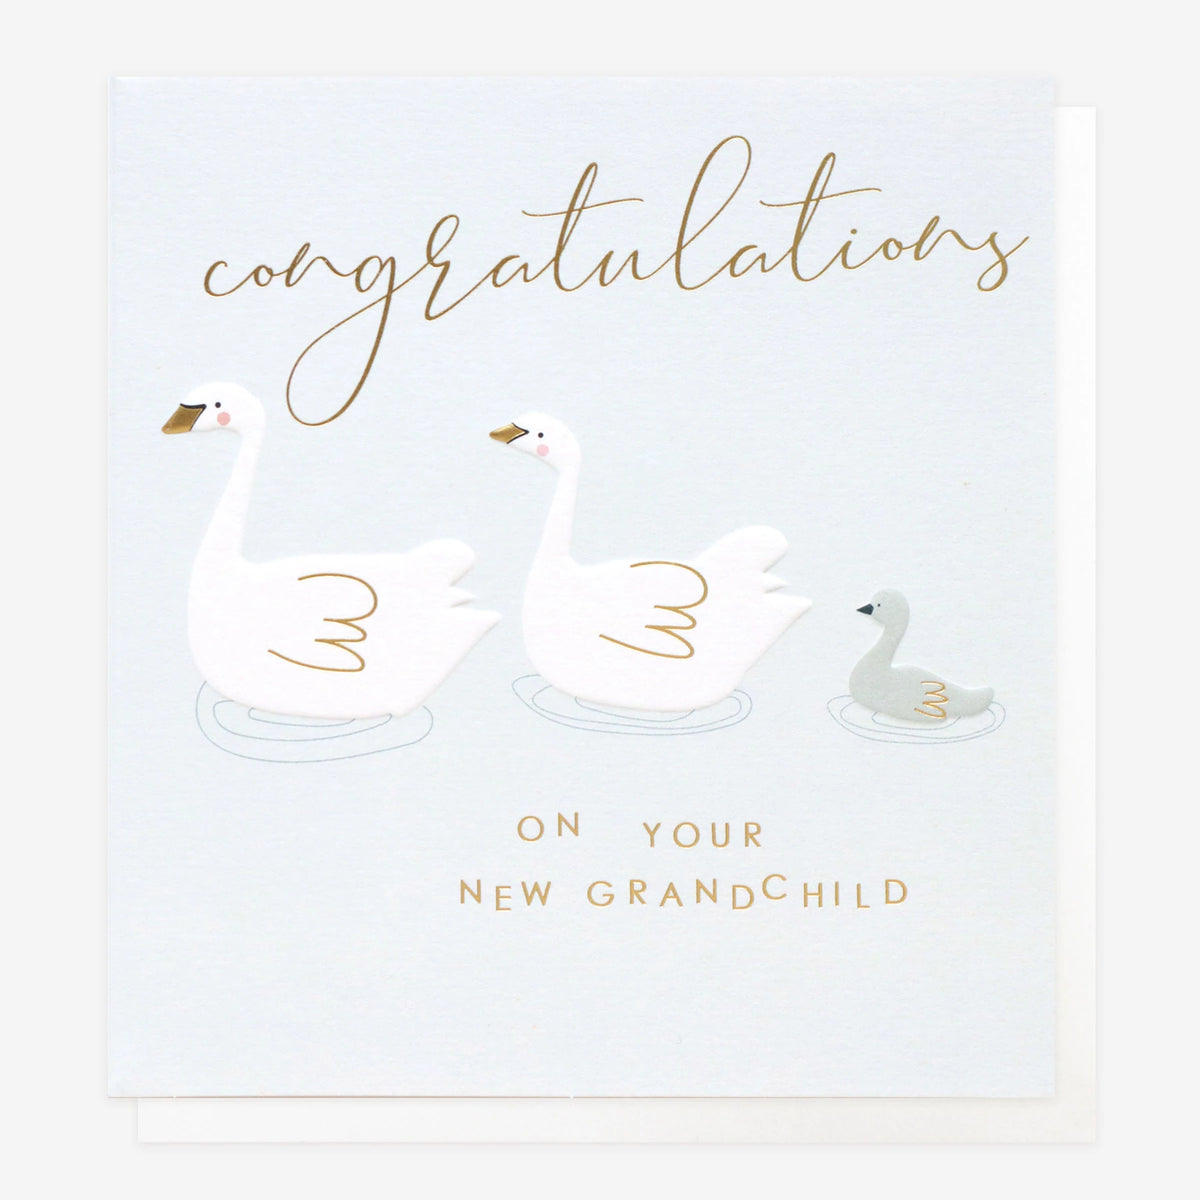 Congratulations On Your New Grandchild